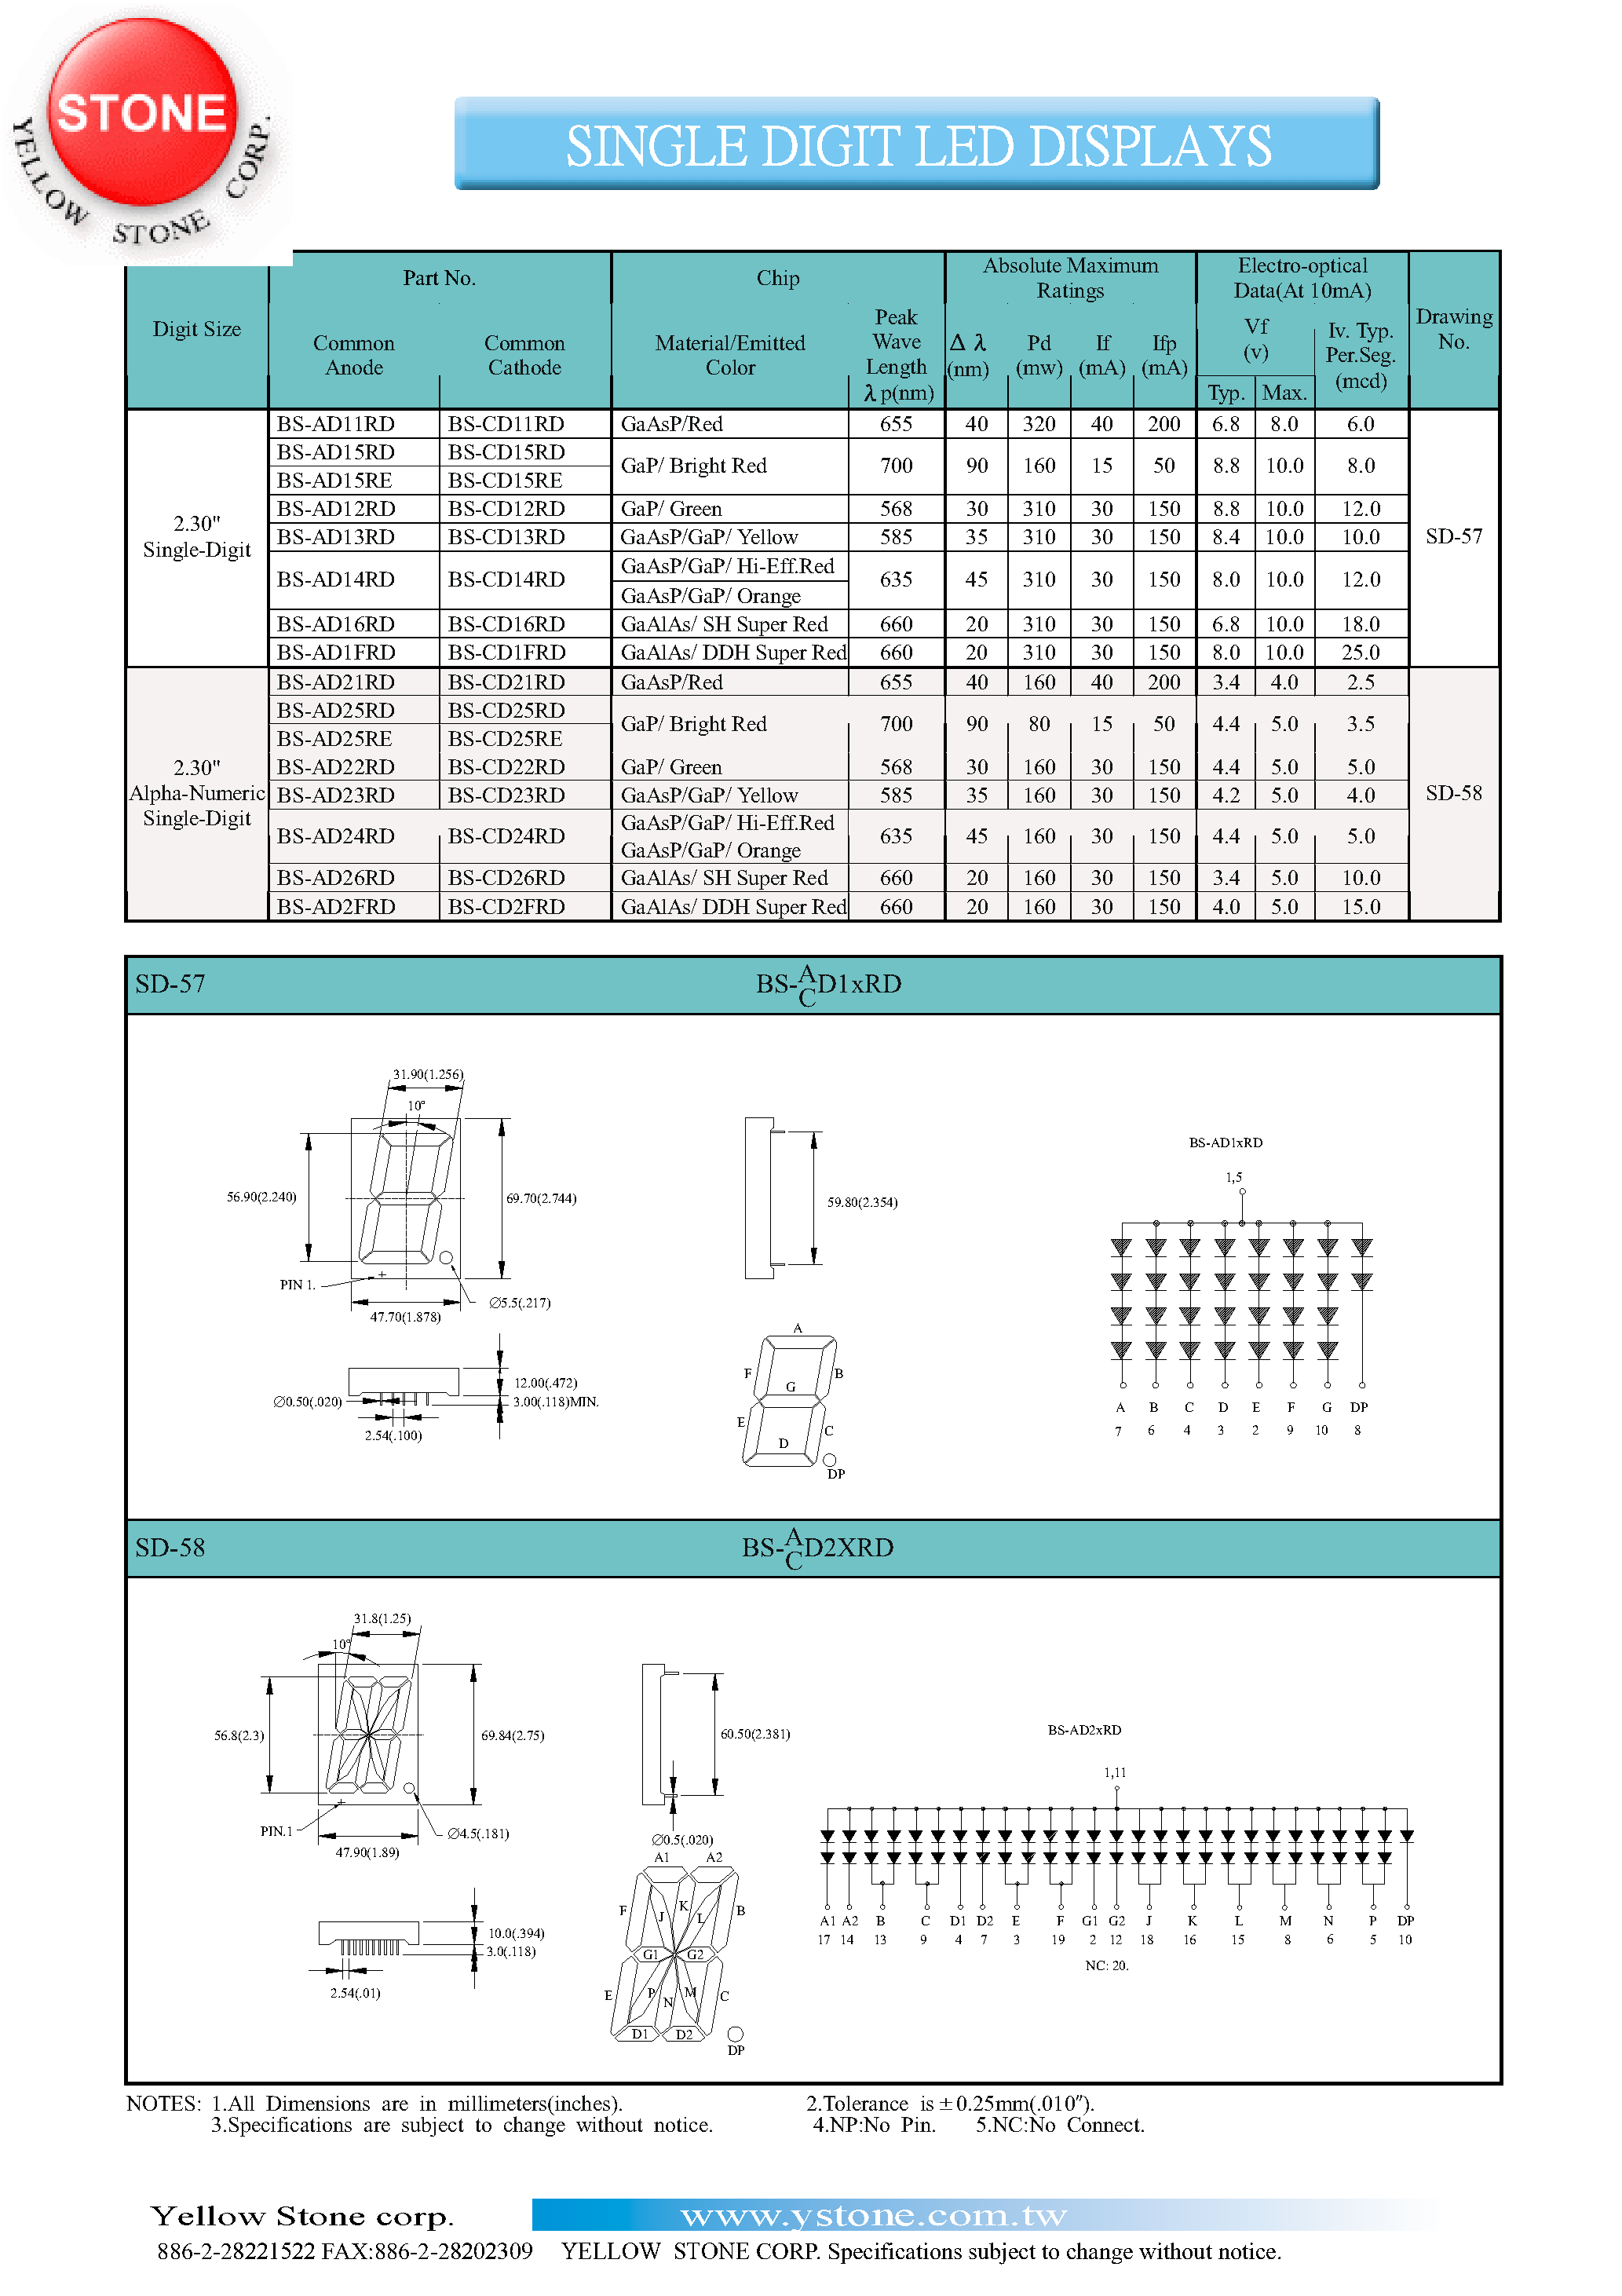 Datasheet BS-AD25RE - SINGLE DIGIT LED DISPLAYS page 1